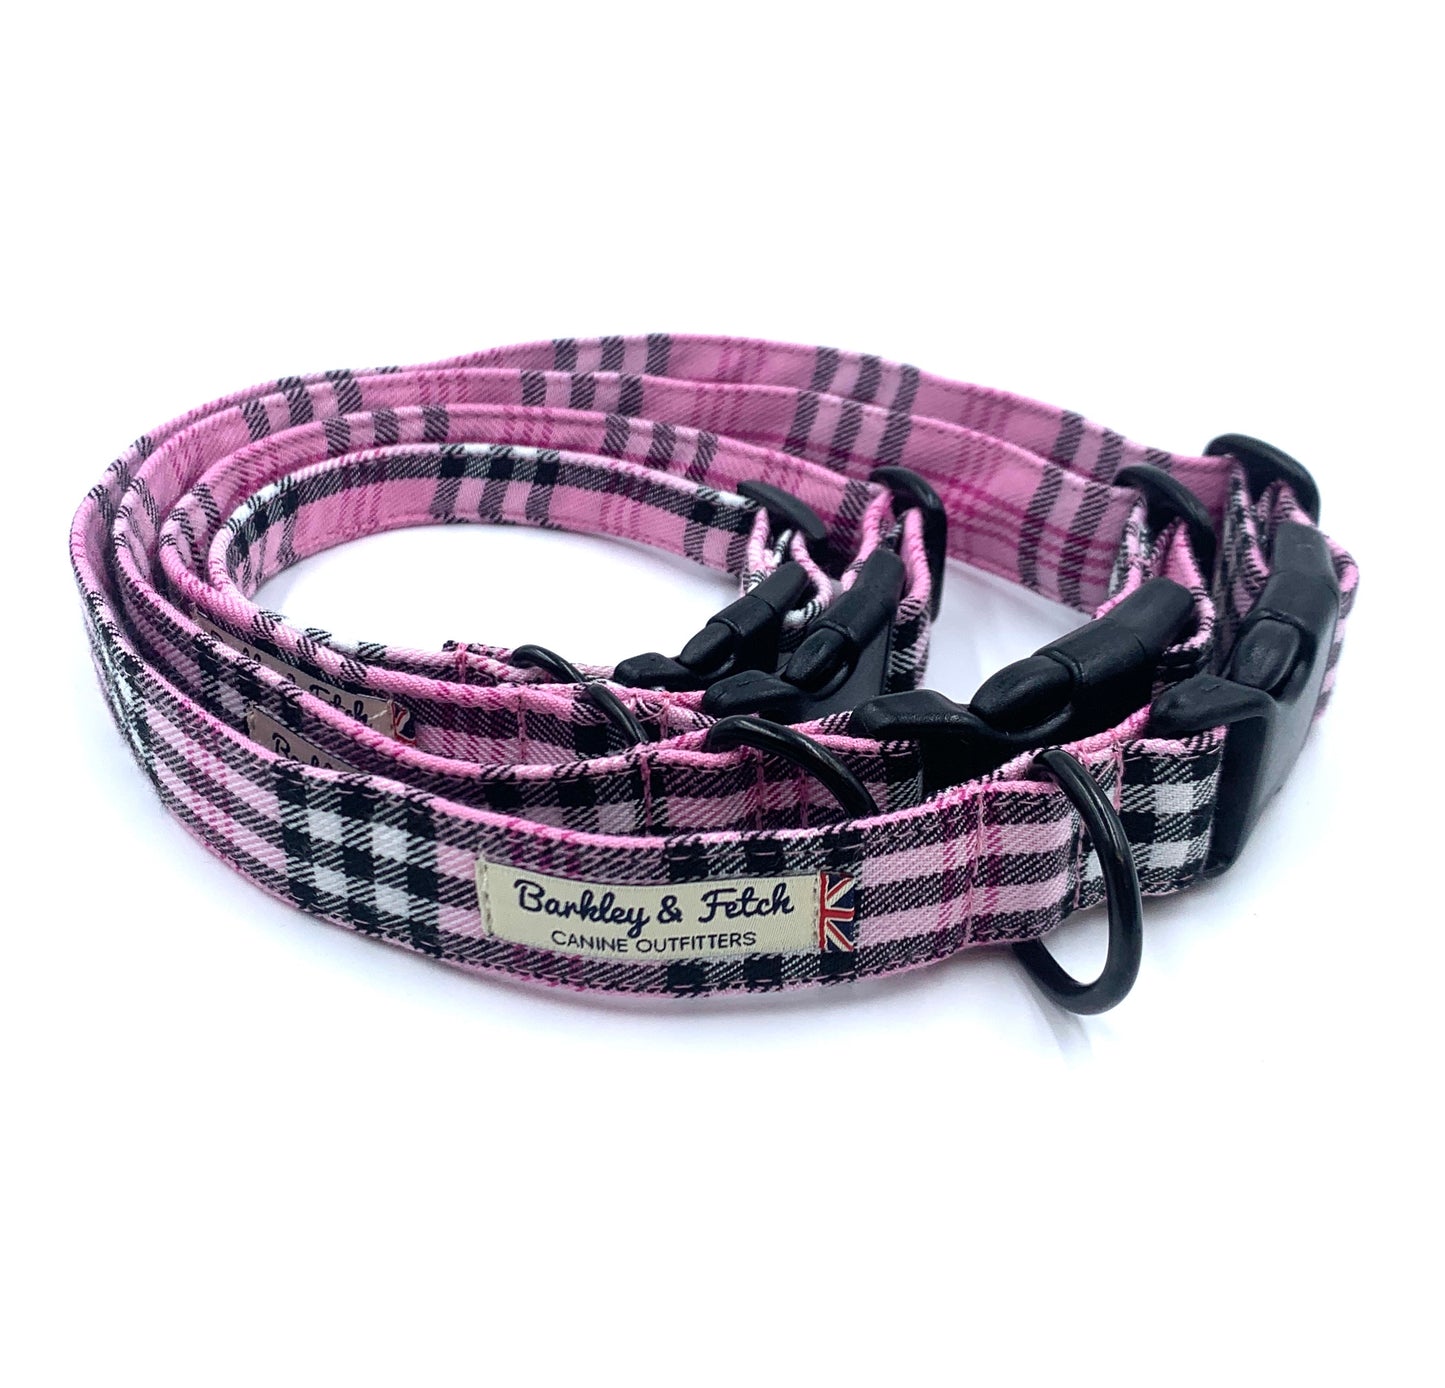 PinkBerry Check Dog Collar